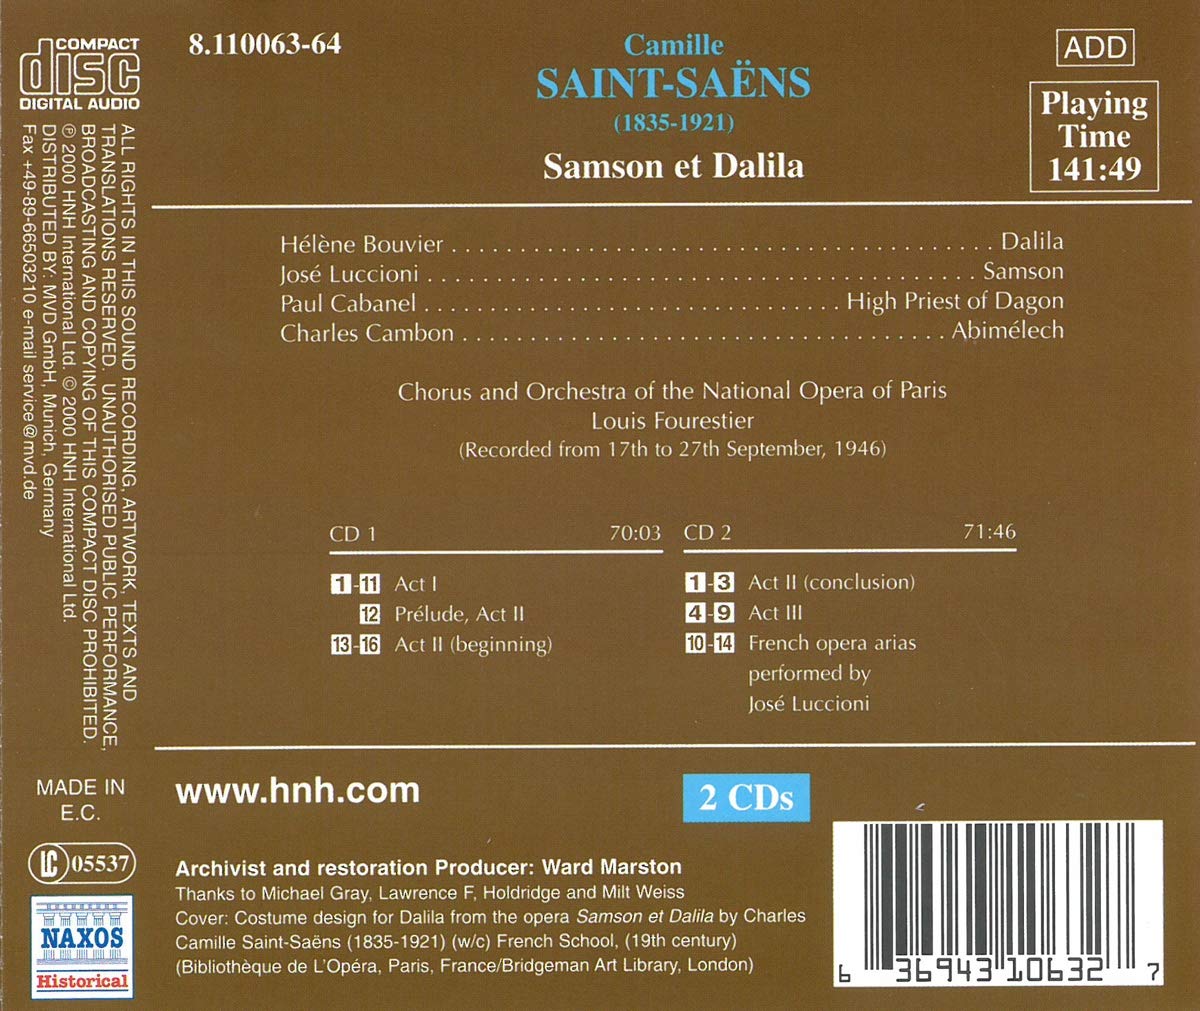 SAINT-SAENS: Samson et Dalila - slide-1